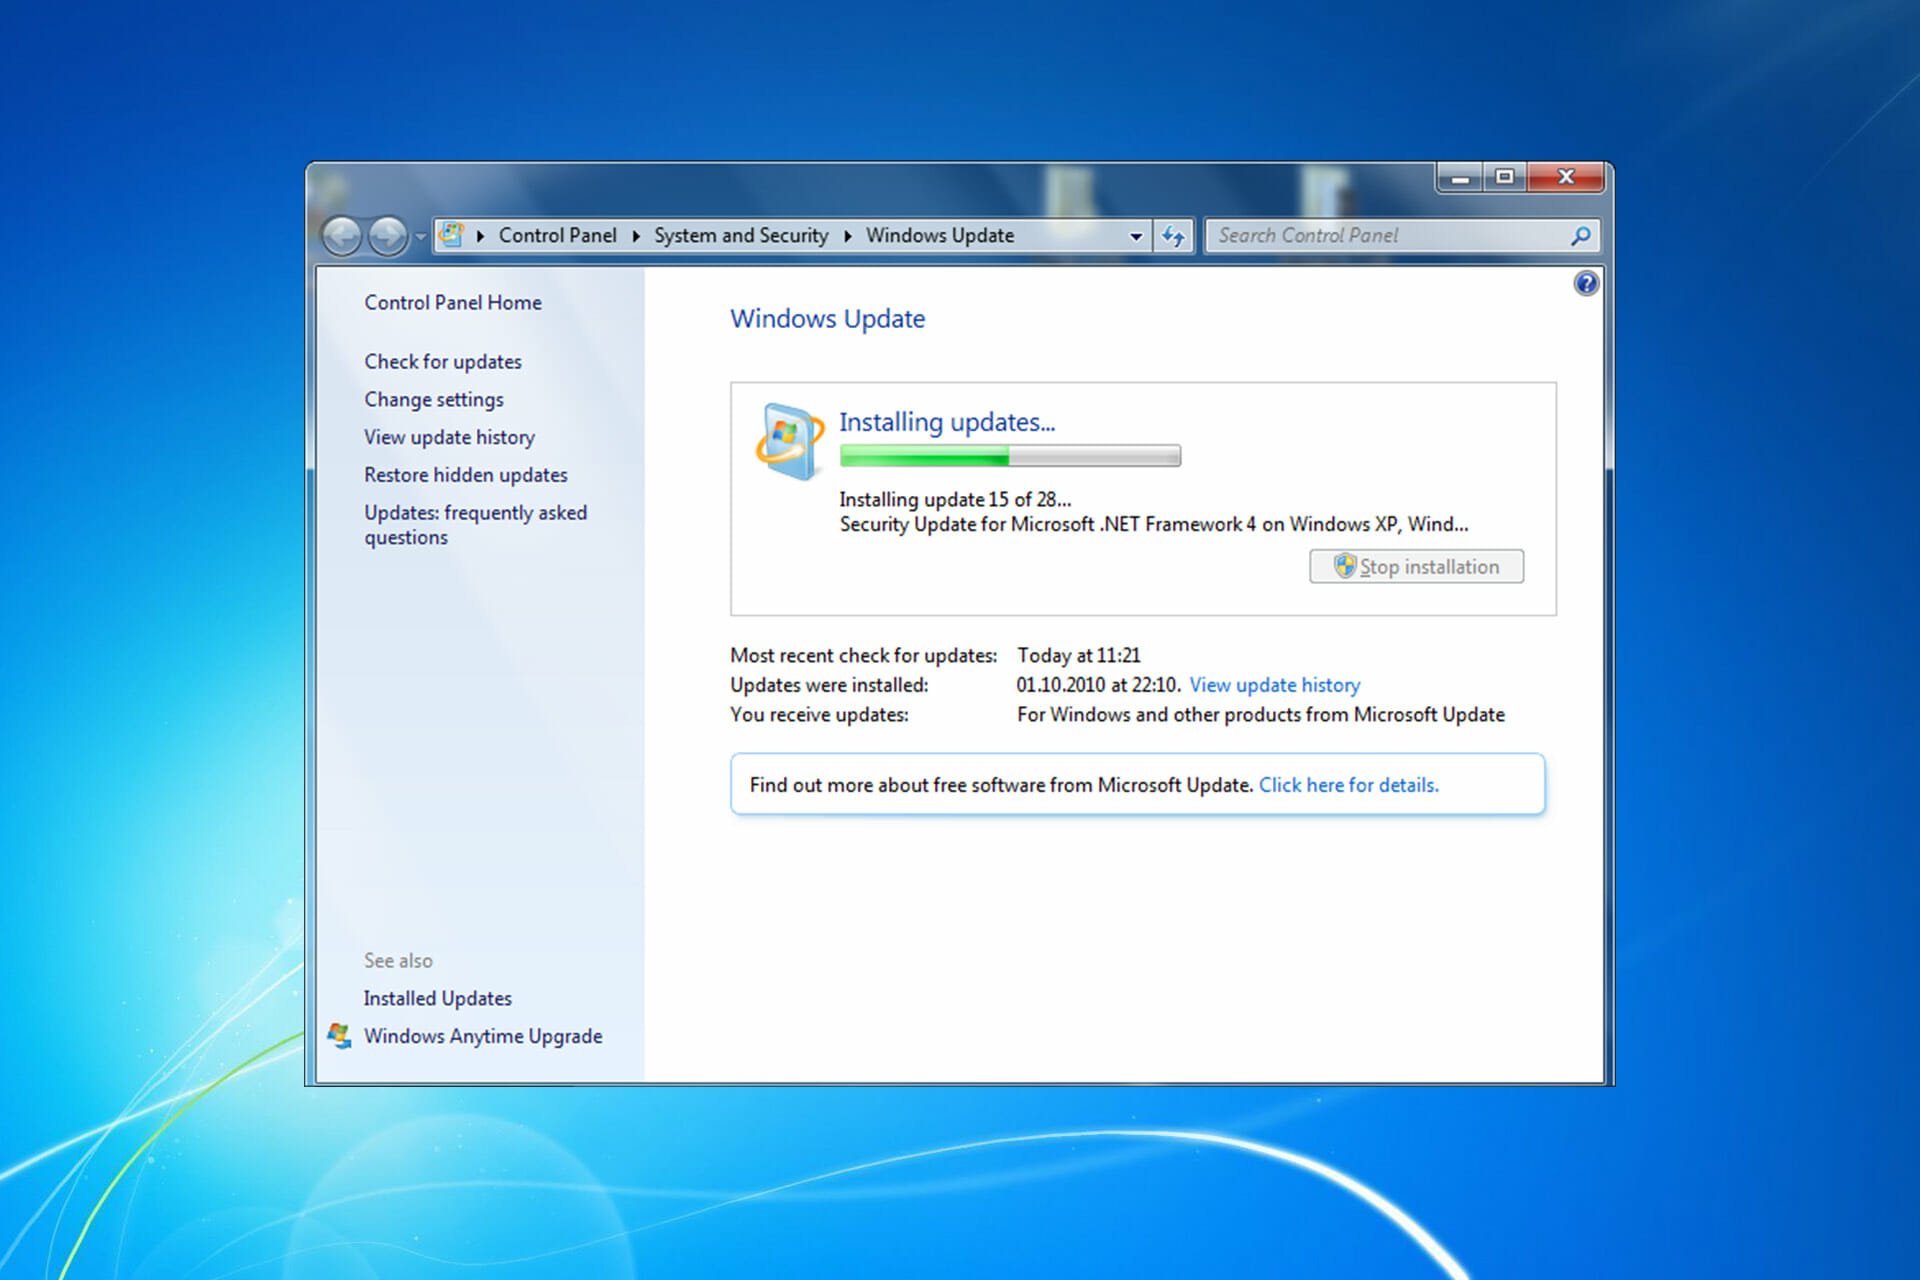 download windows 7 updates manually 64 bit